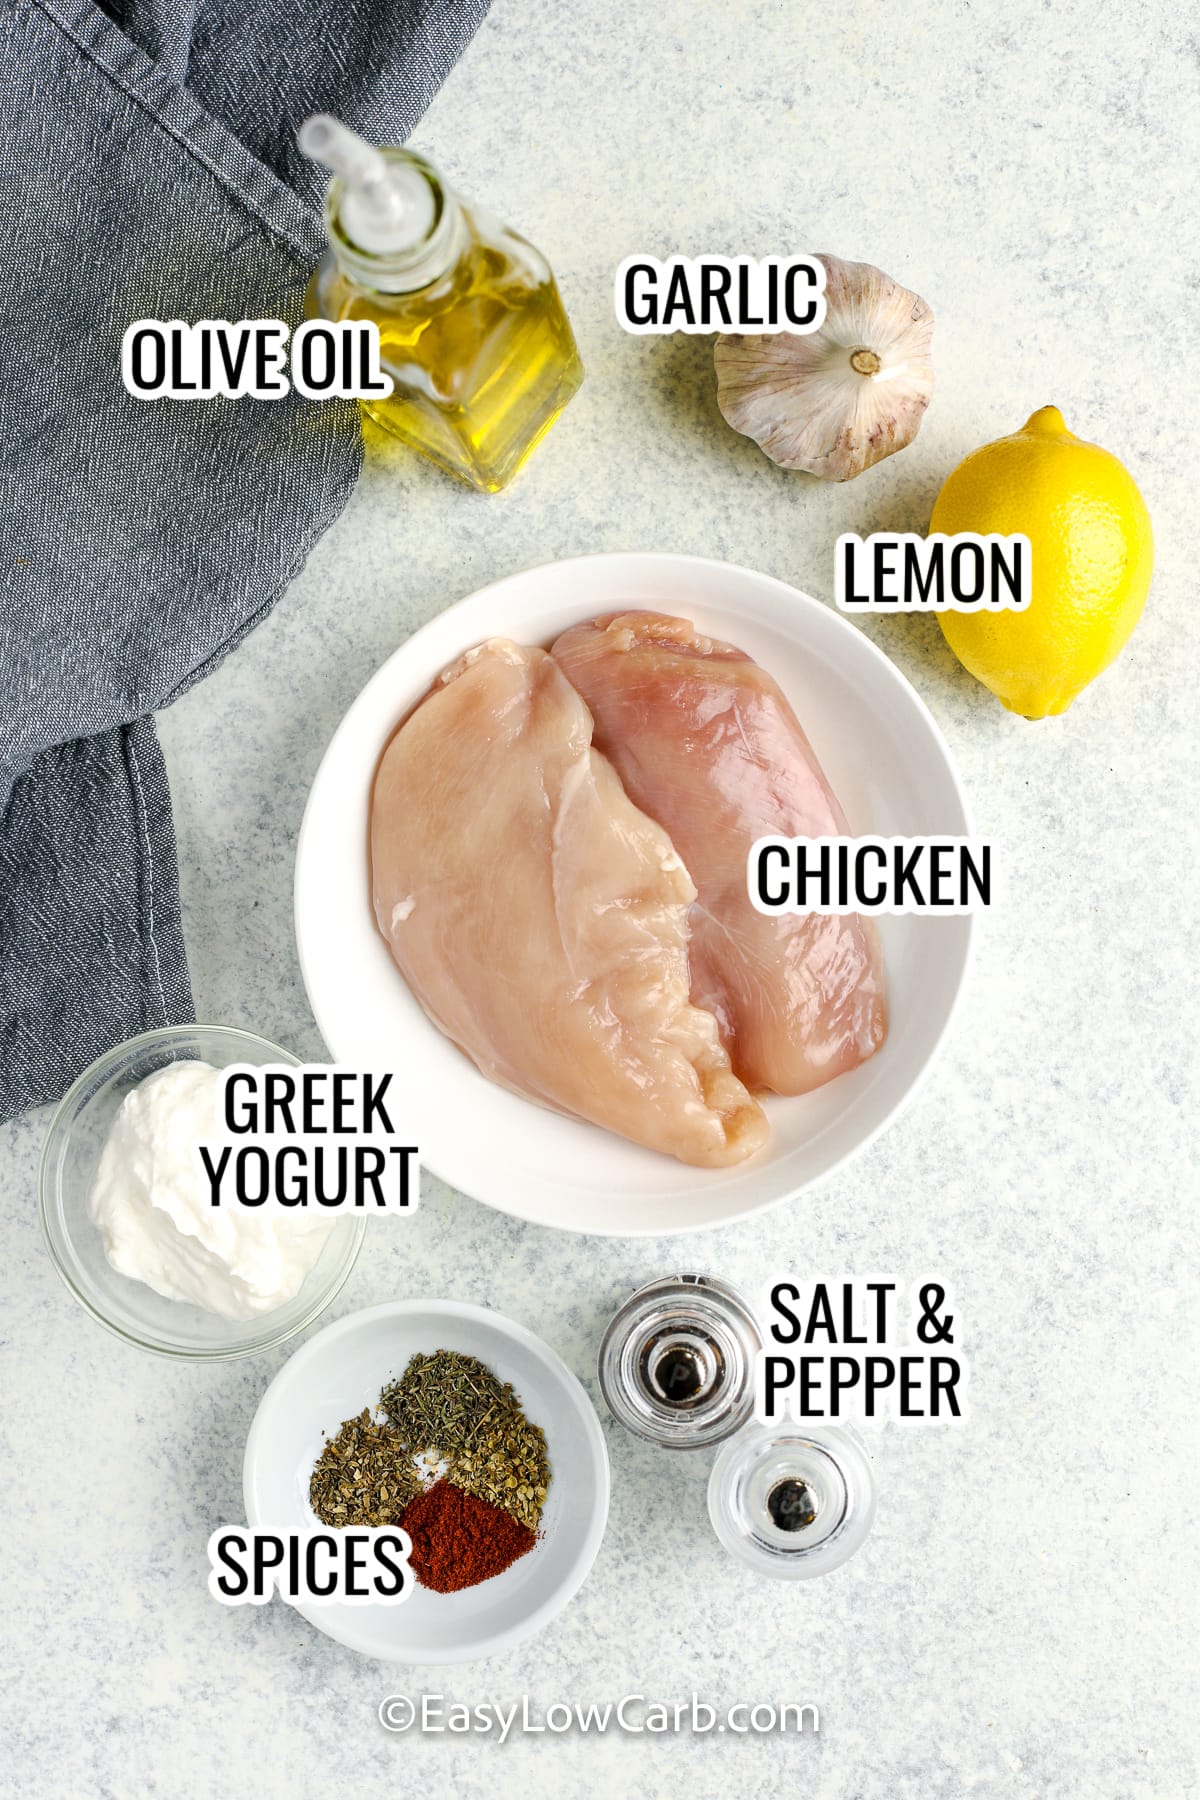 ingredients for greek yogurt chicken, including chicken, garlic, lemon, olive oil, greek yogurt, spices, and salt and pepper